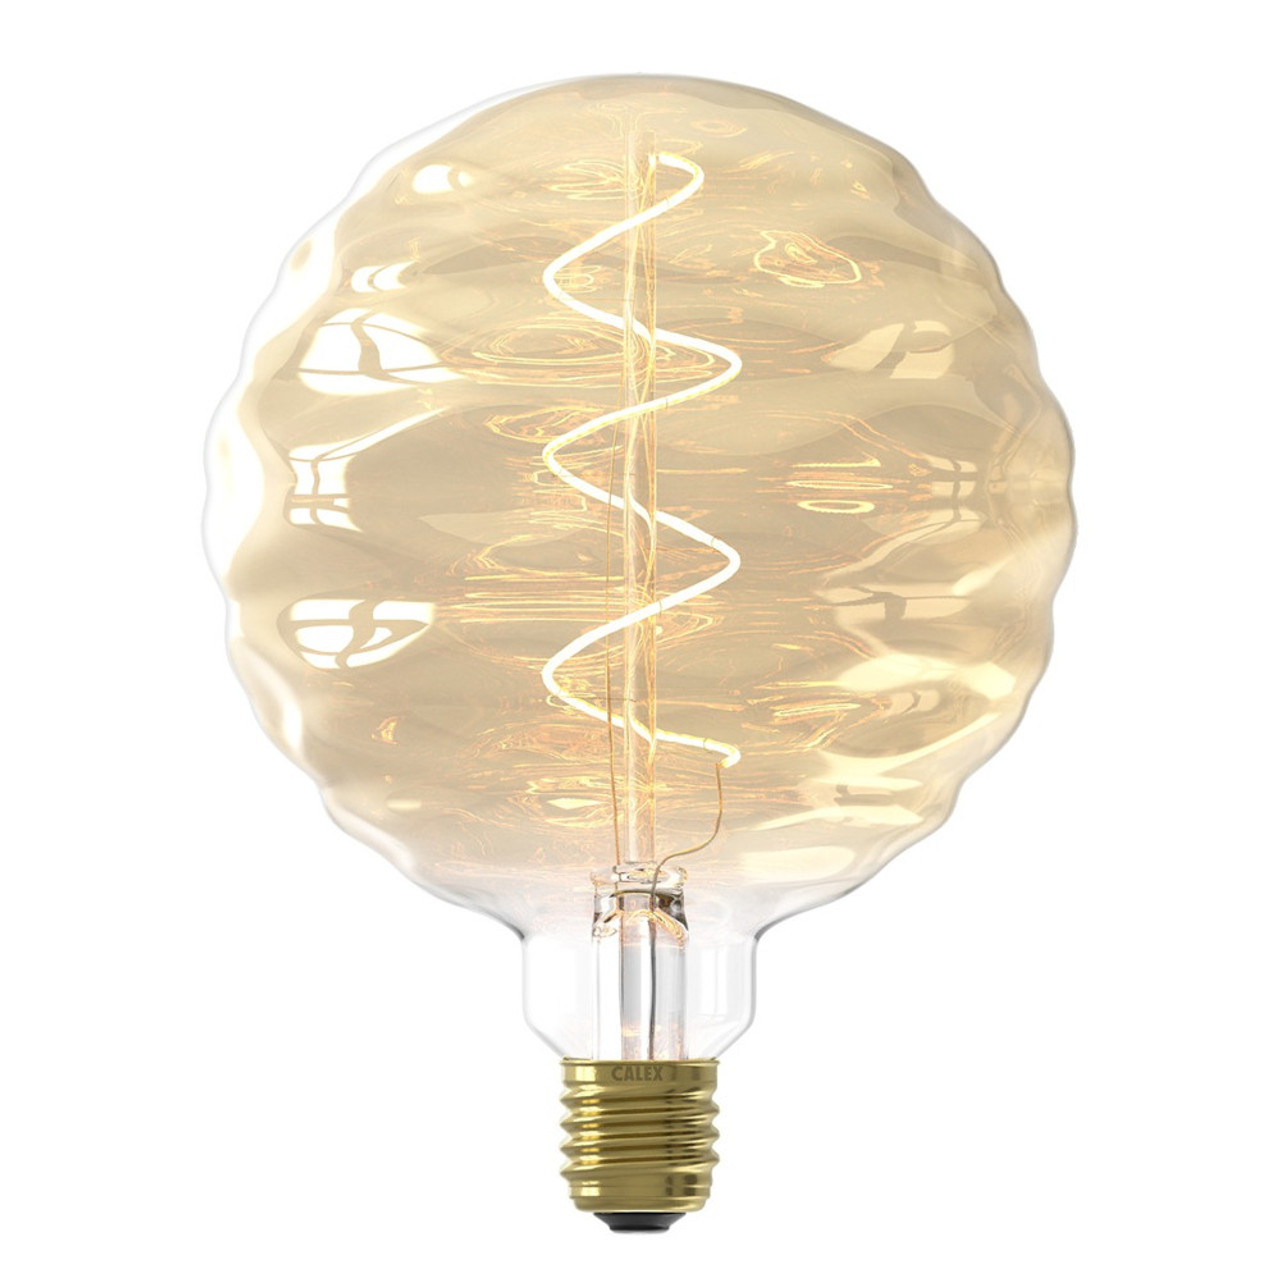 Calex LED Bilbao Lamp Gold 4W E27 1800K CRi90 Dimmable